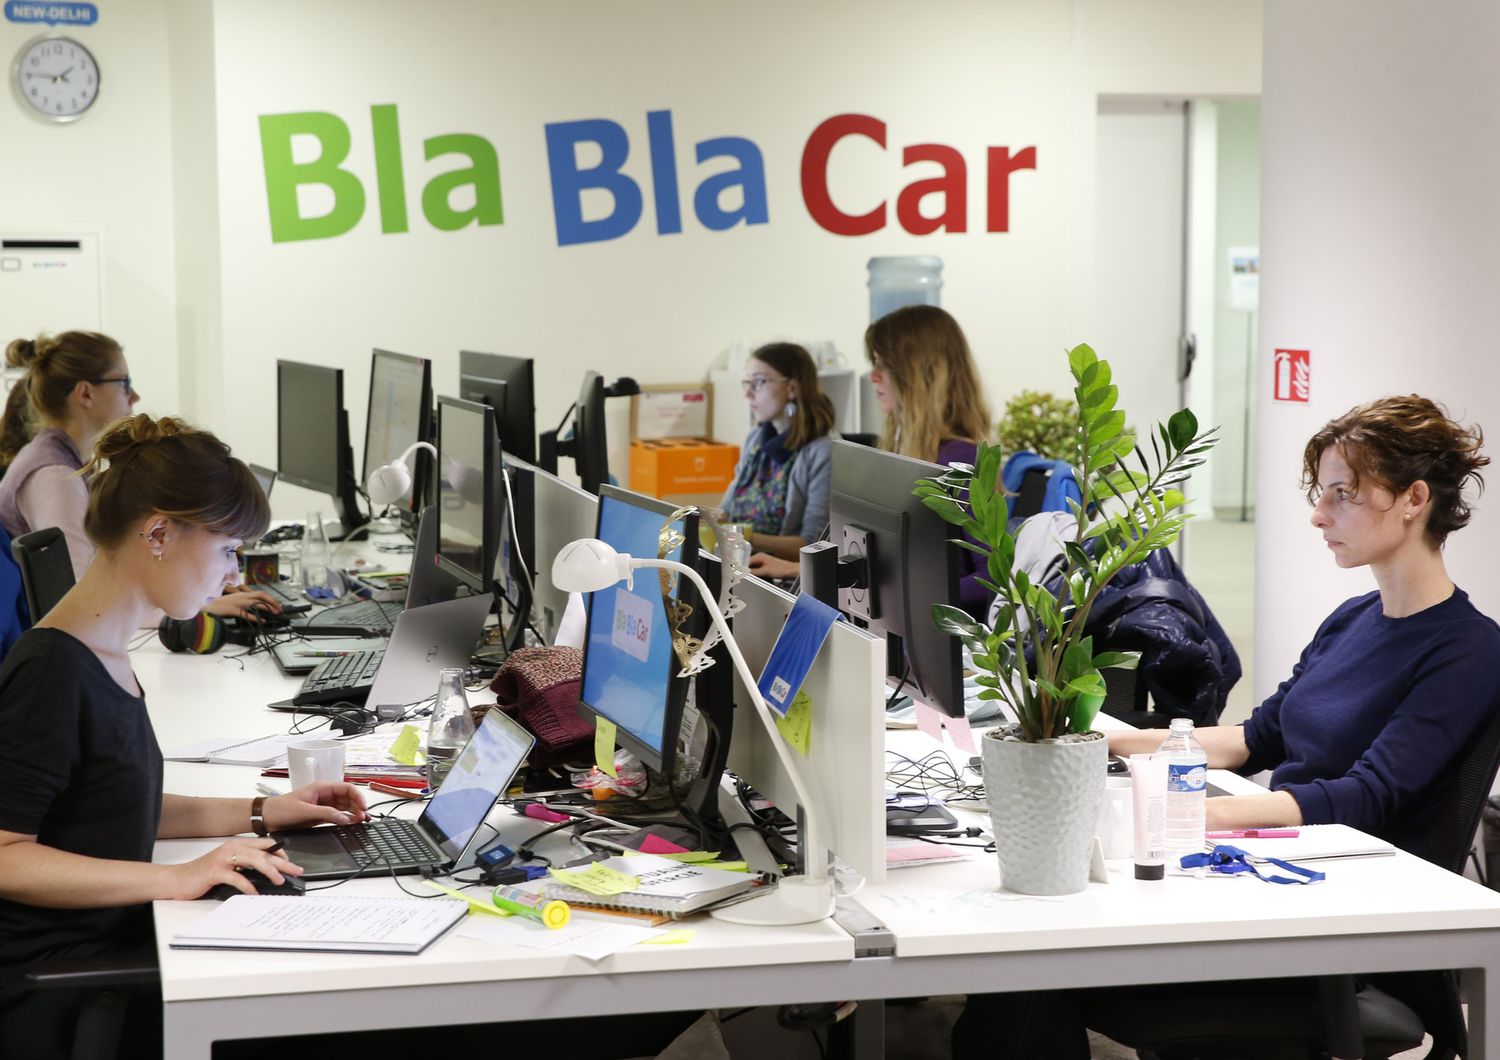 Perch&eacute; Bla Bla Car ha&nbsp;acquistato&nbsp;una&nbsp;startup&nbsp;senza utenti?